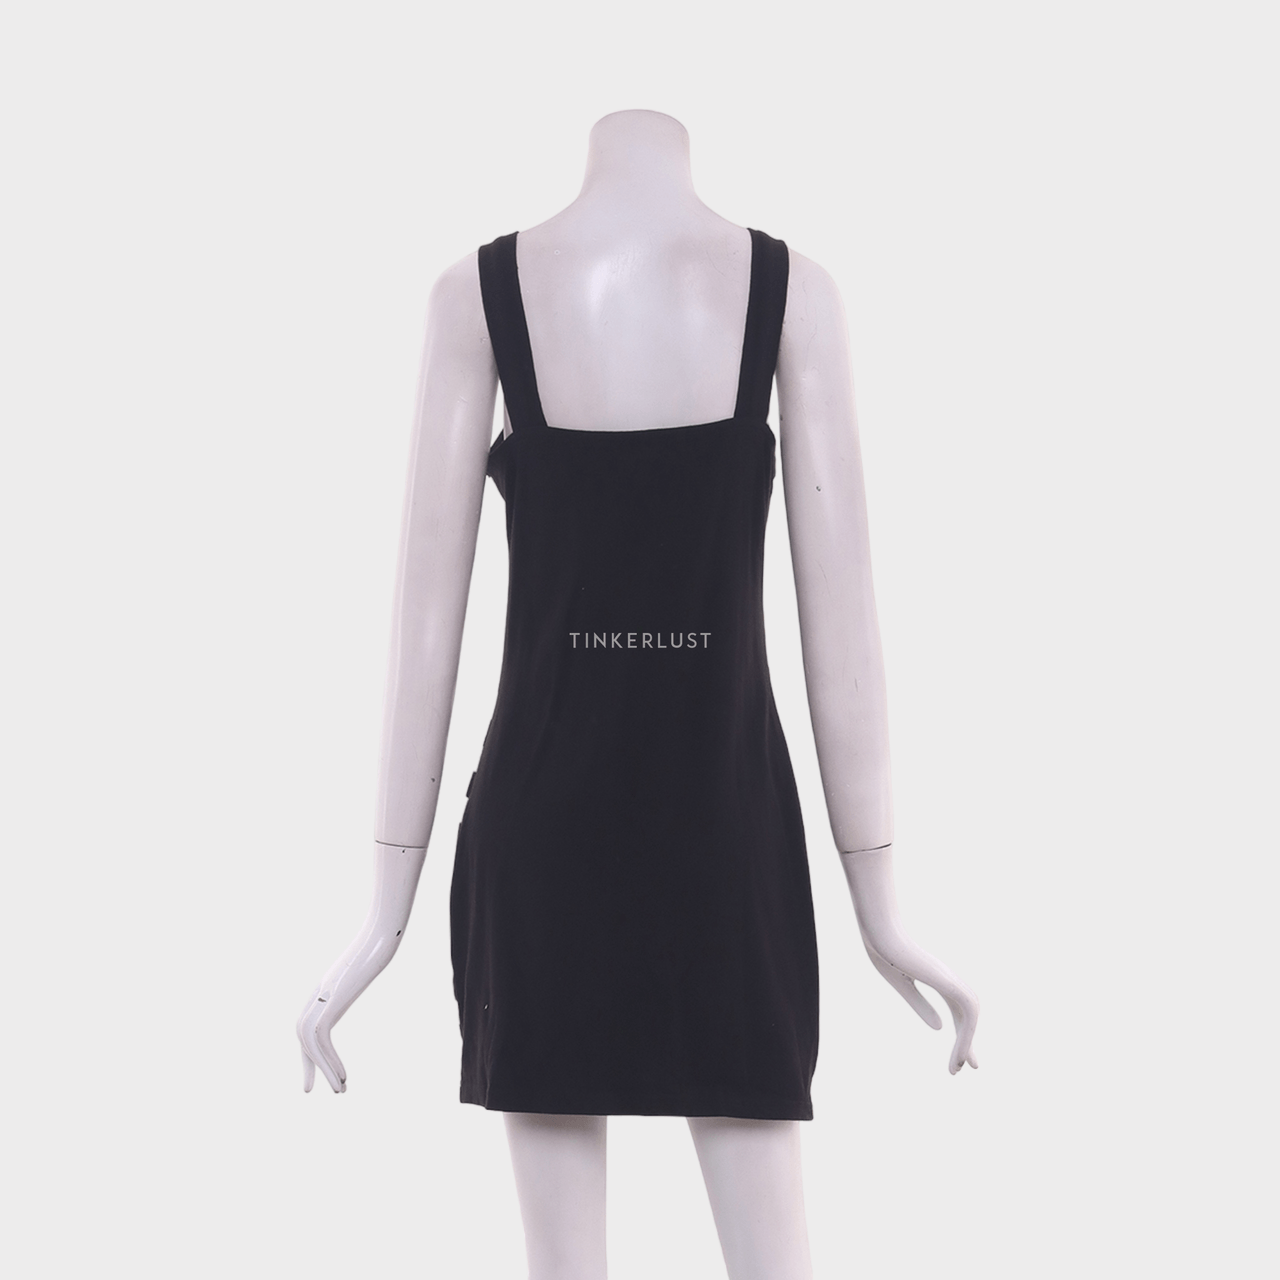 H&M Black & White Mini Dress